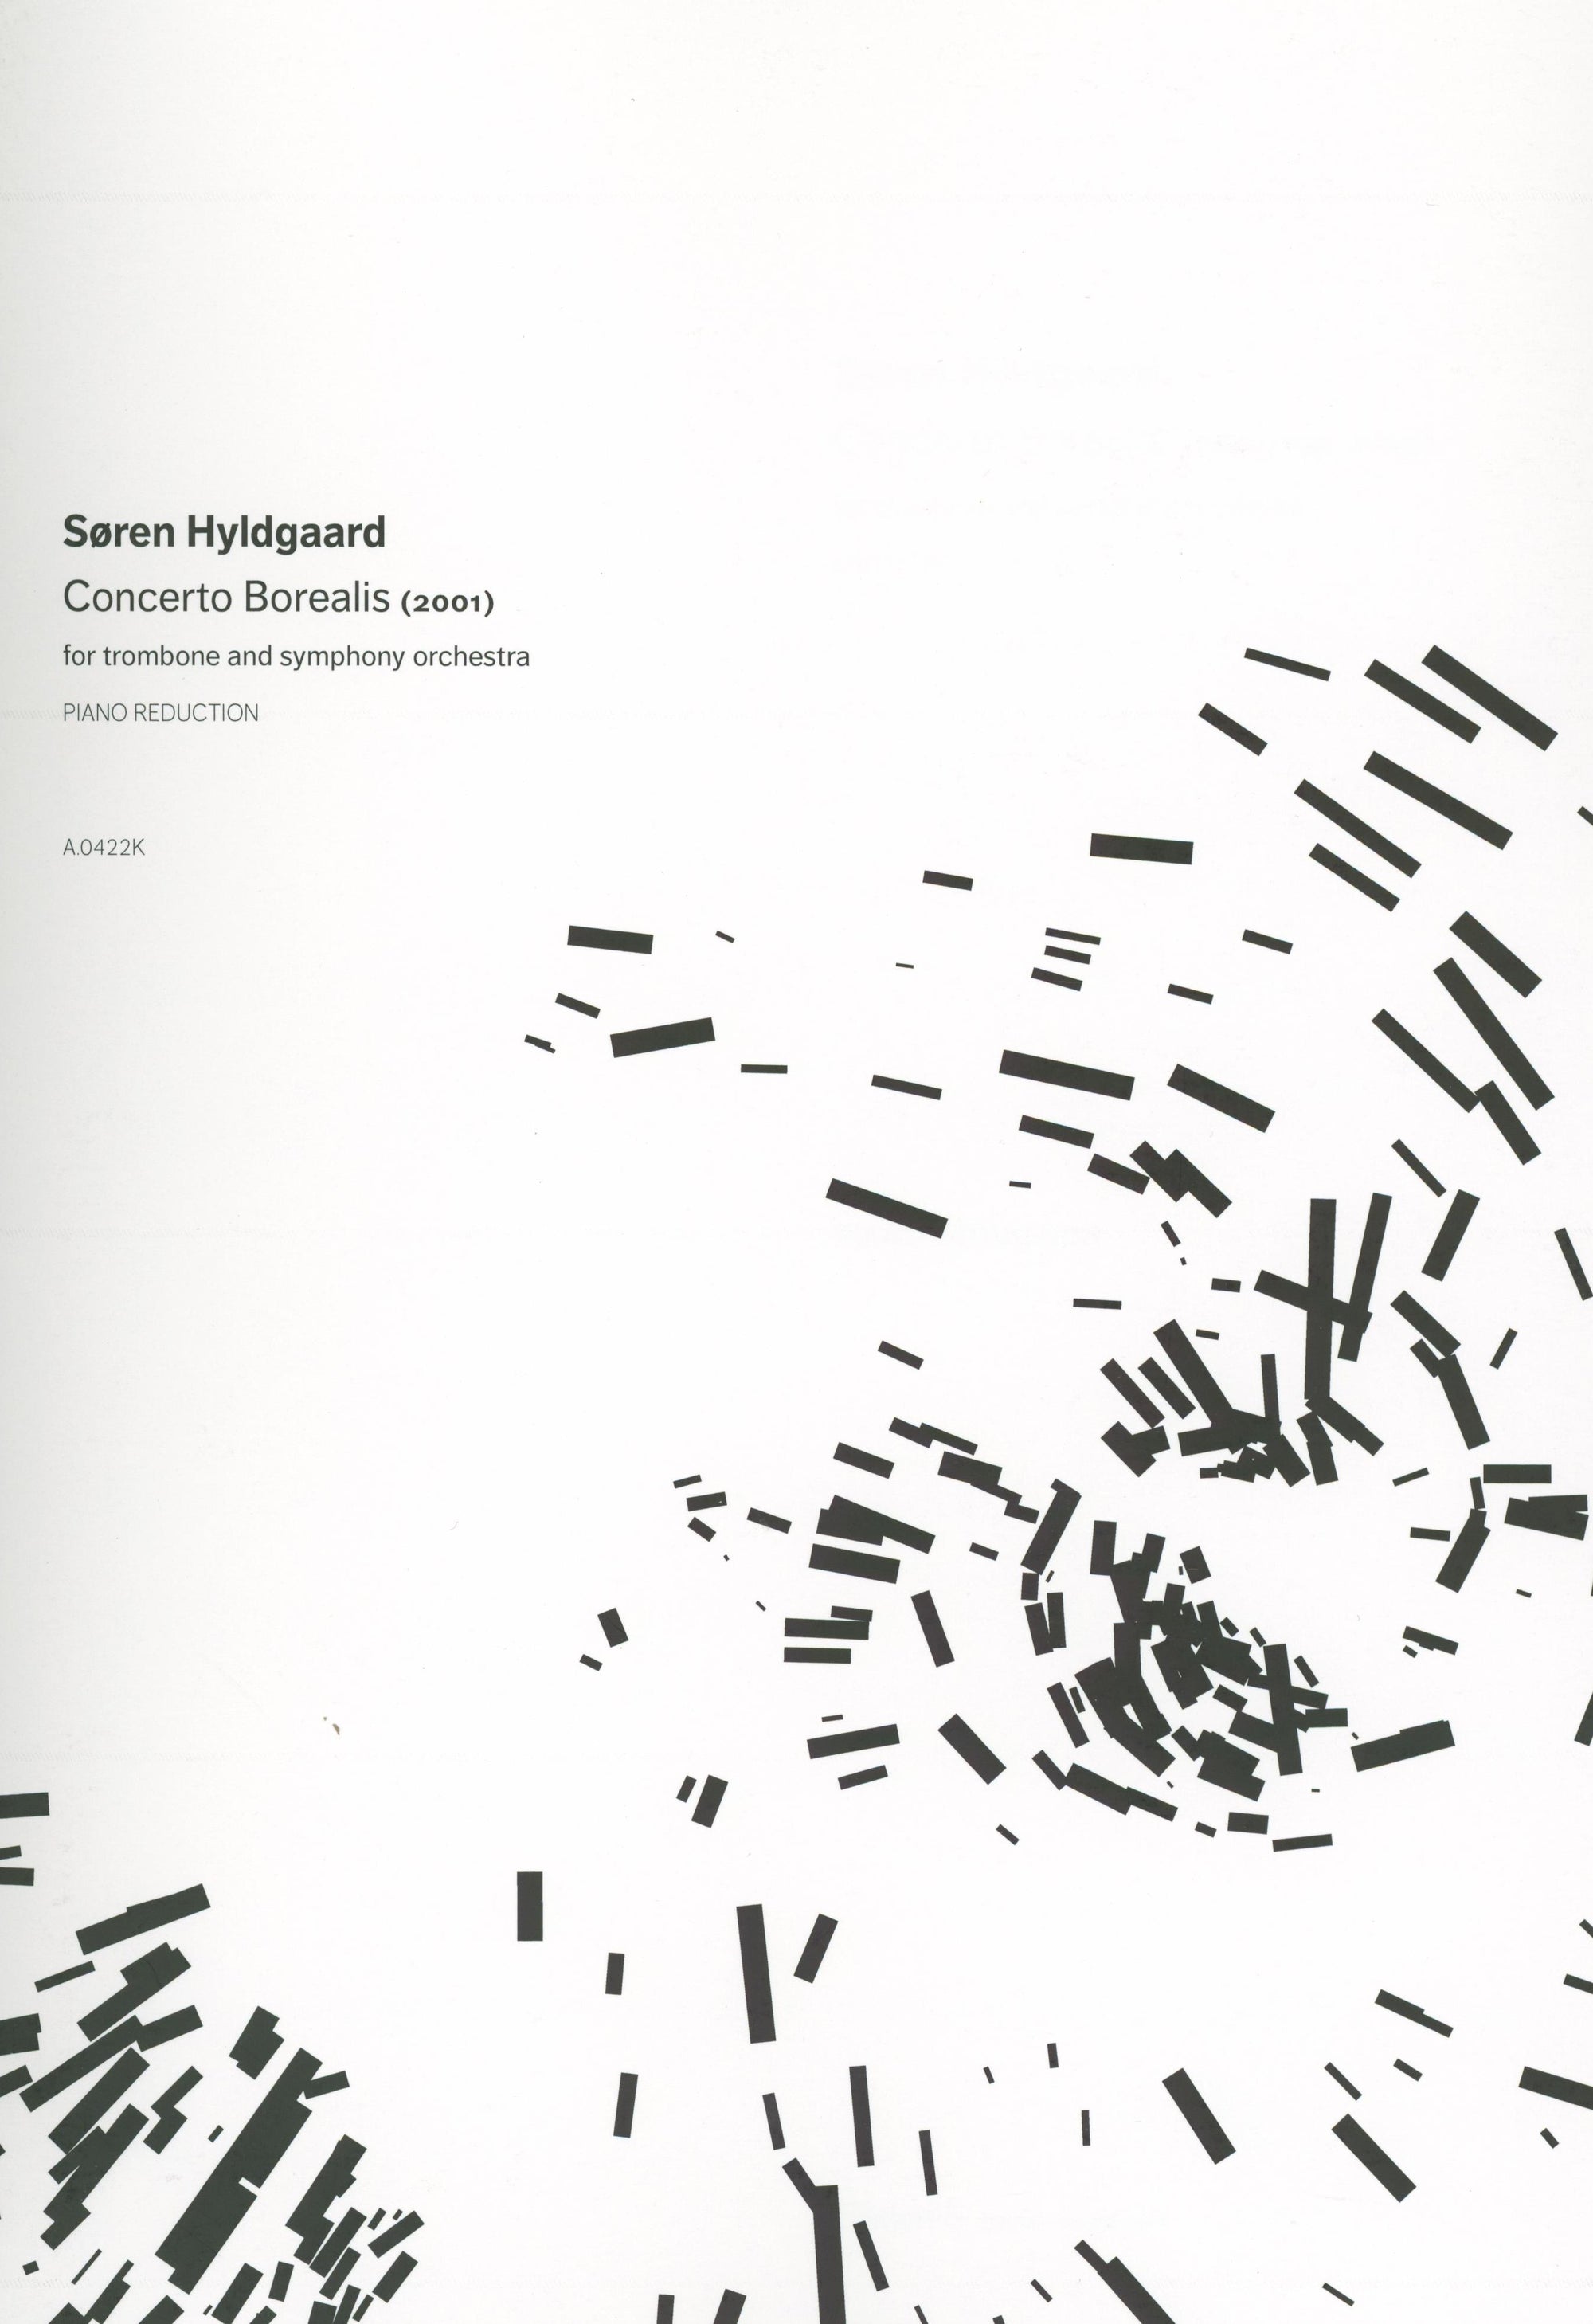 Hyldgaard: Trombone Concerto Borealis